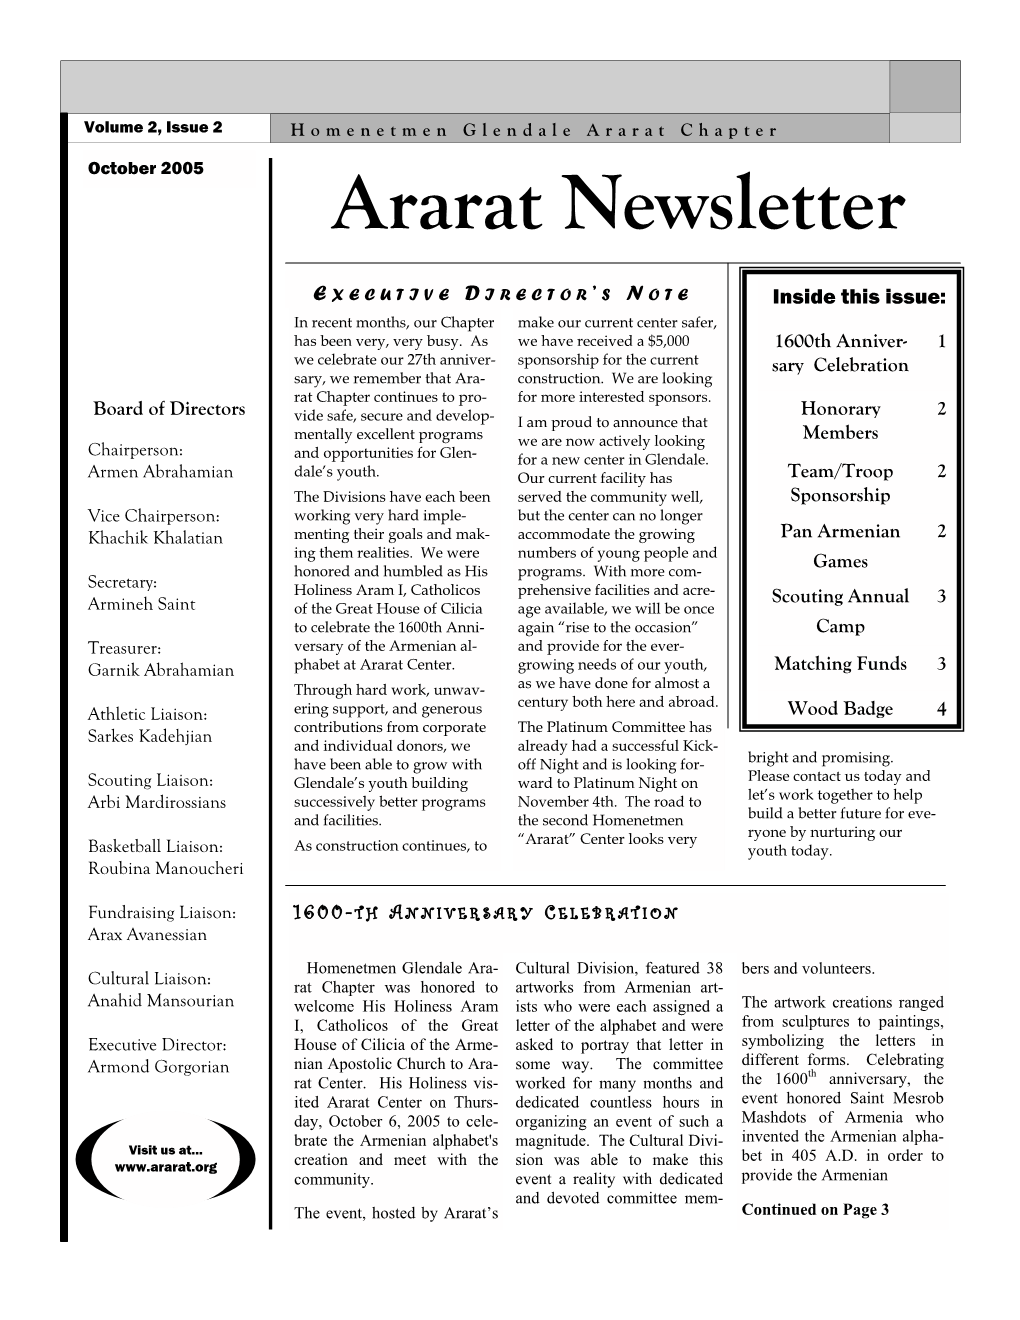 Ararat Newsletter